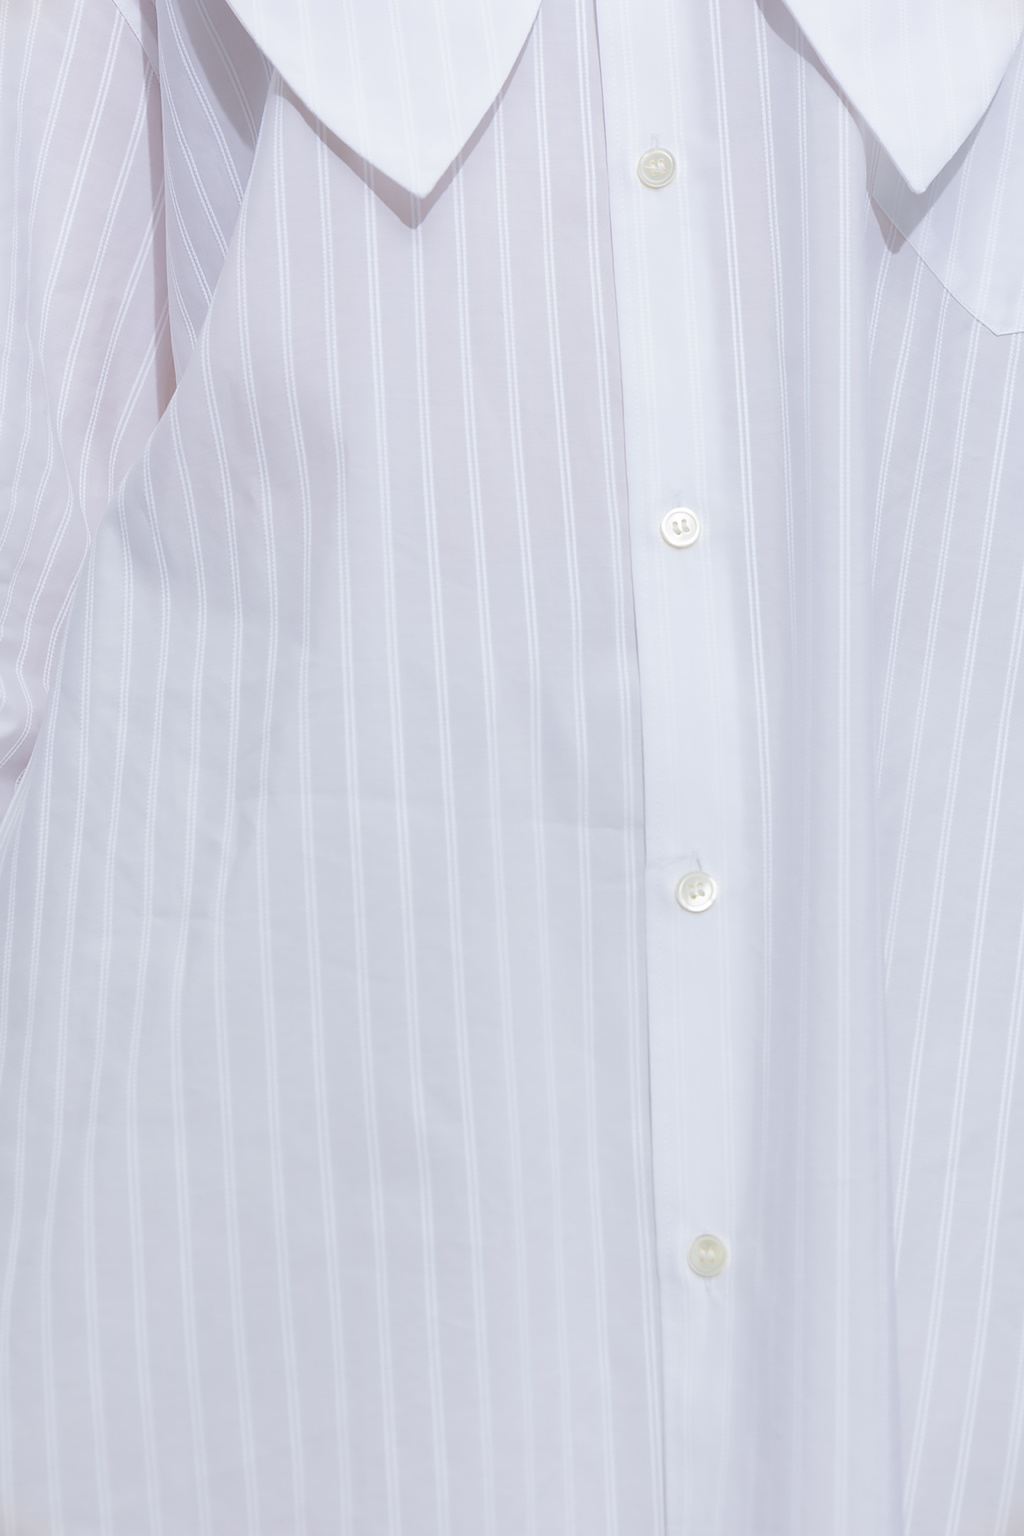 marni Texturierte Pinstriped shirt